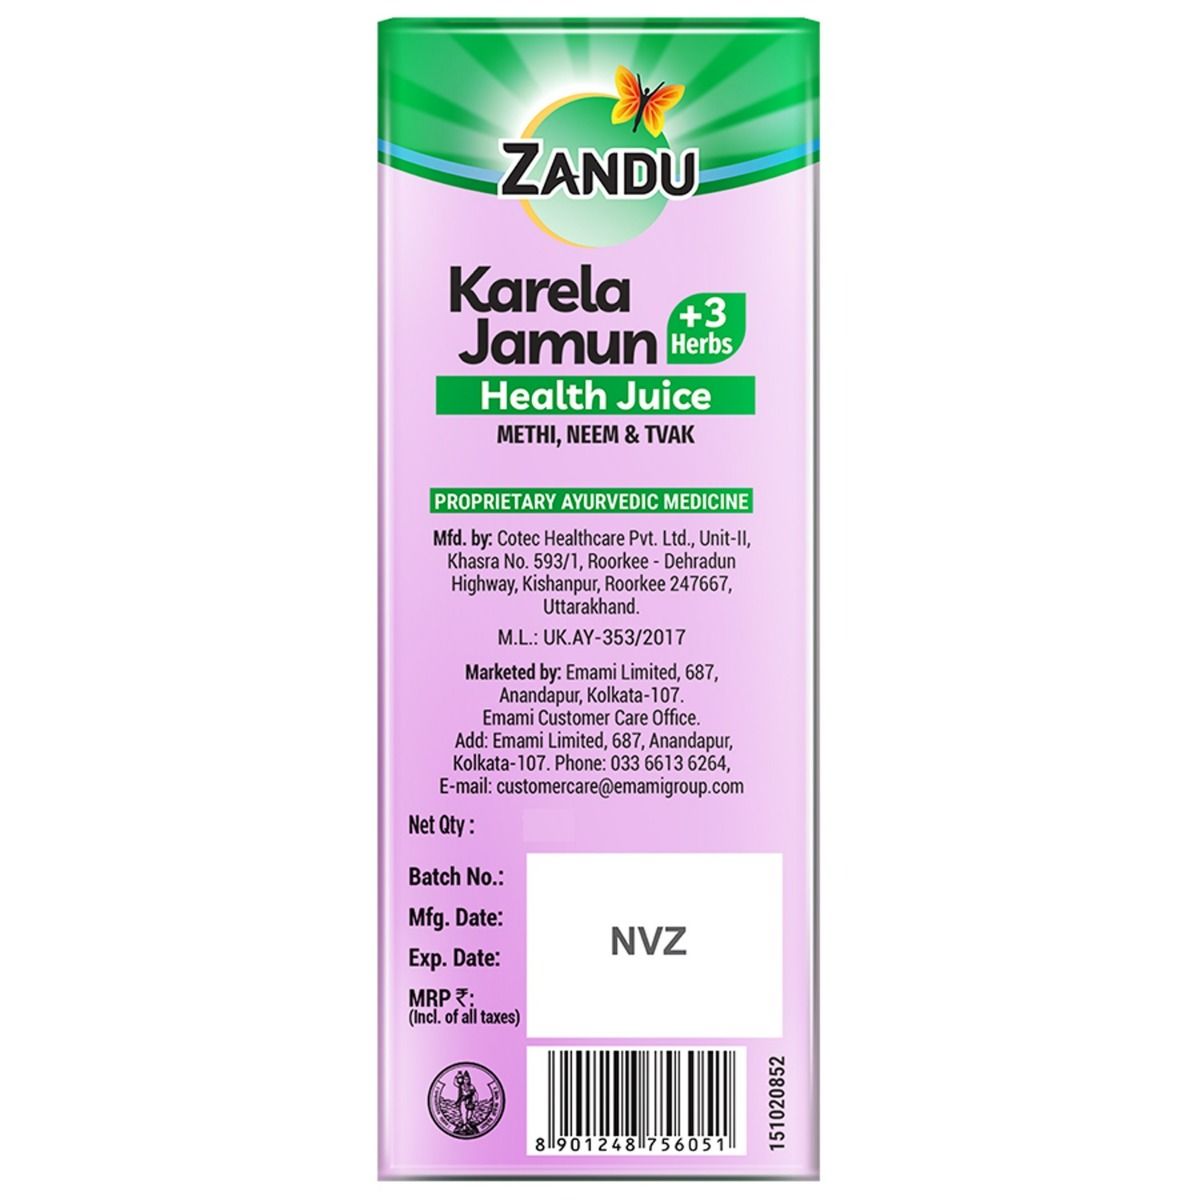 Zandu Karela Jamun +3 Herbs Health Juice, 1000 ml, Pack of 1 